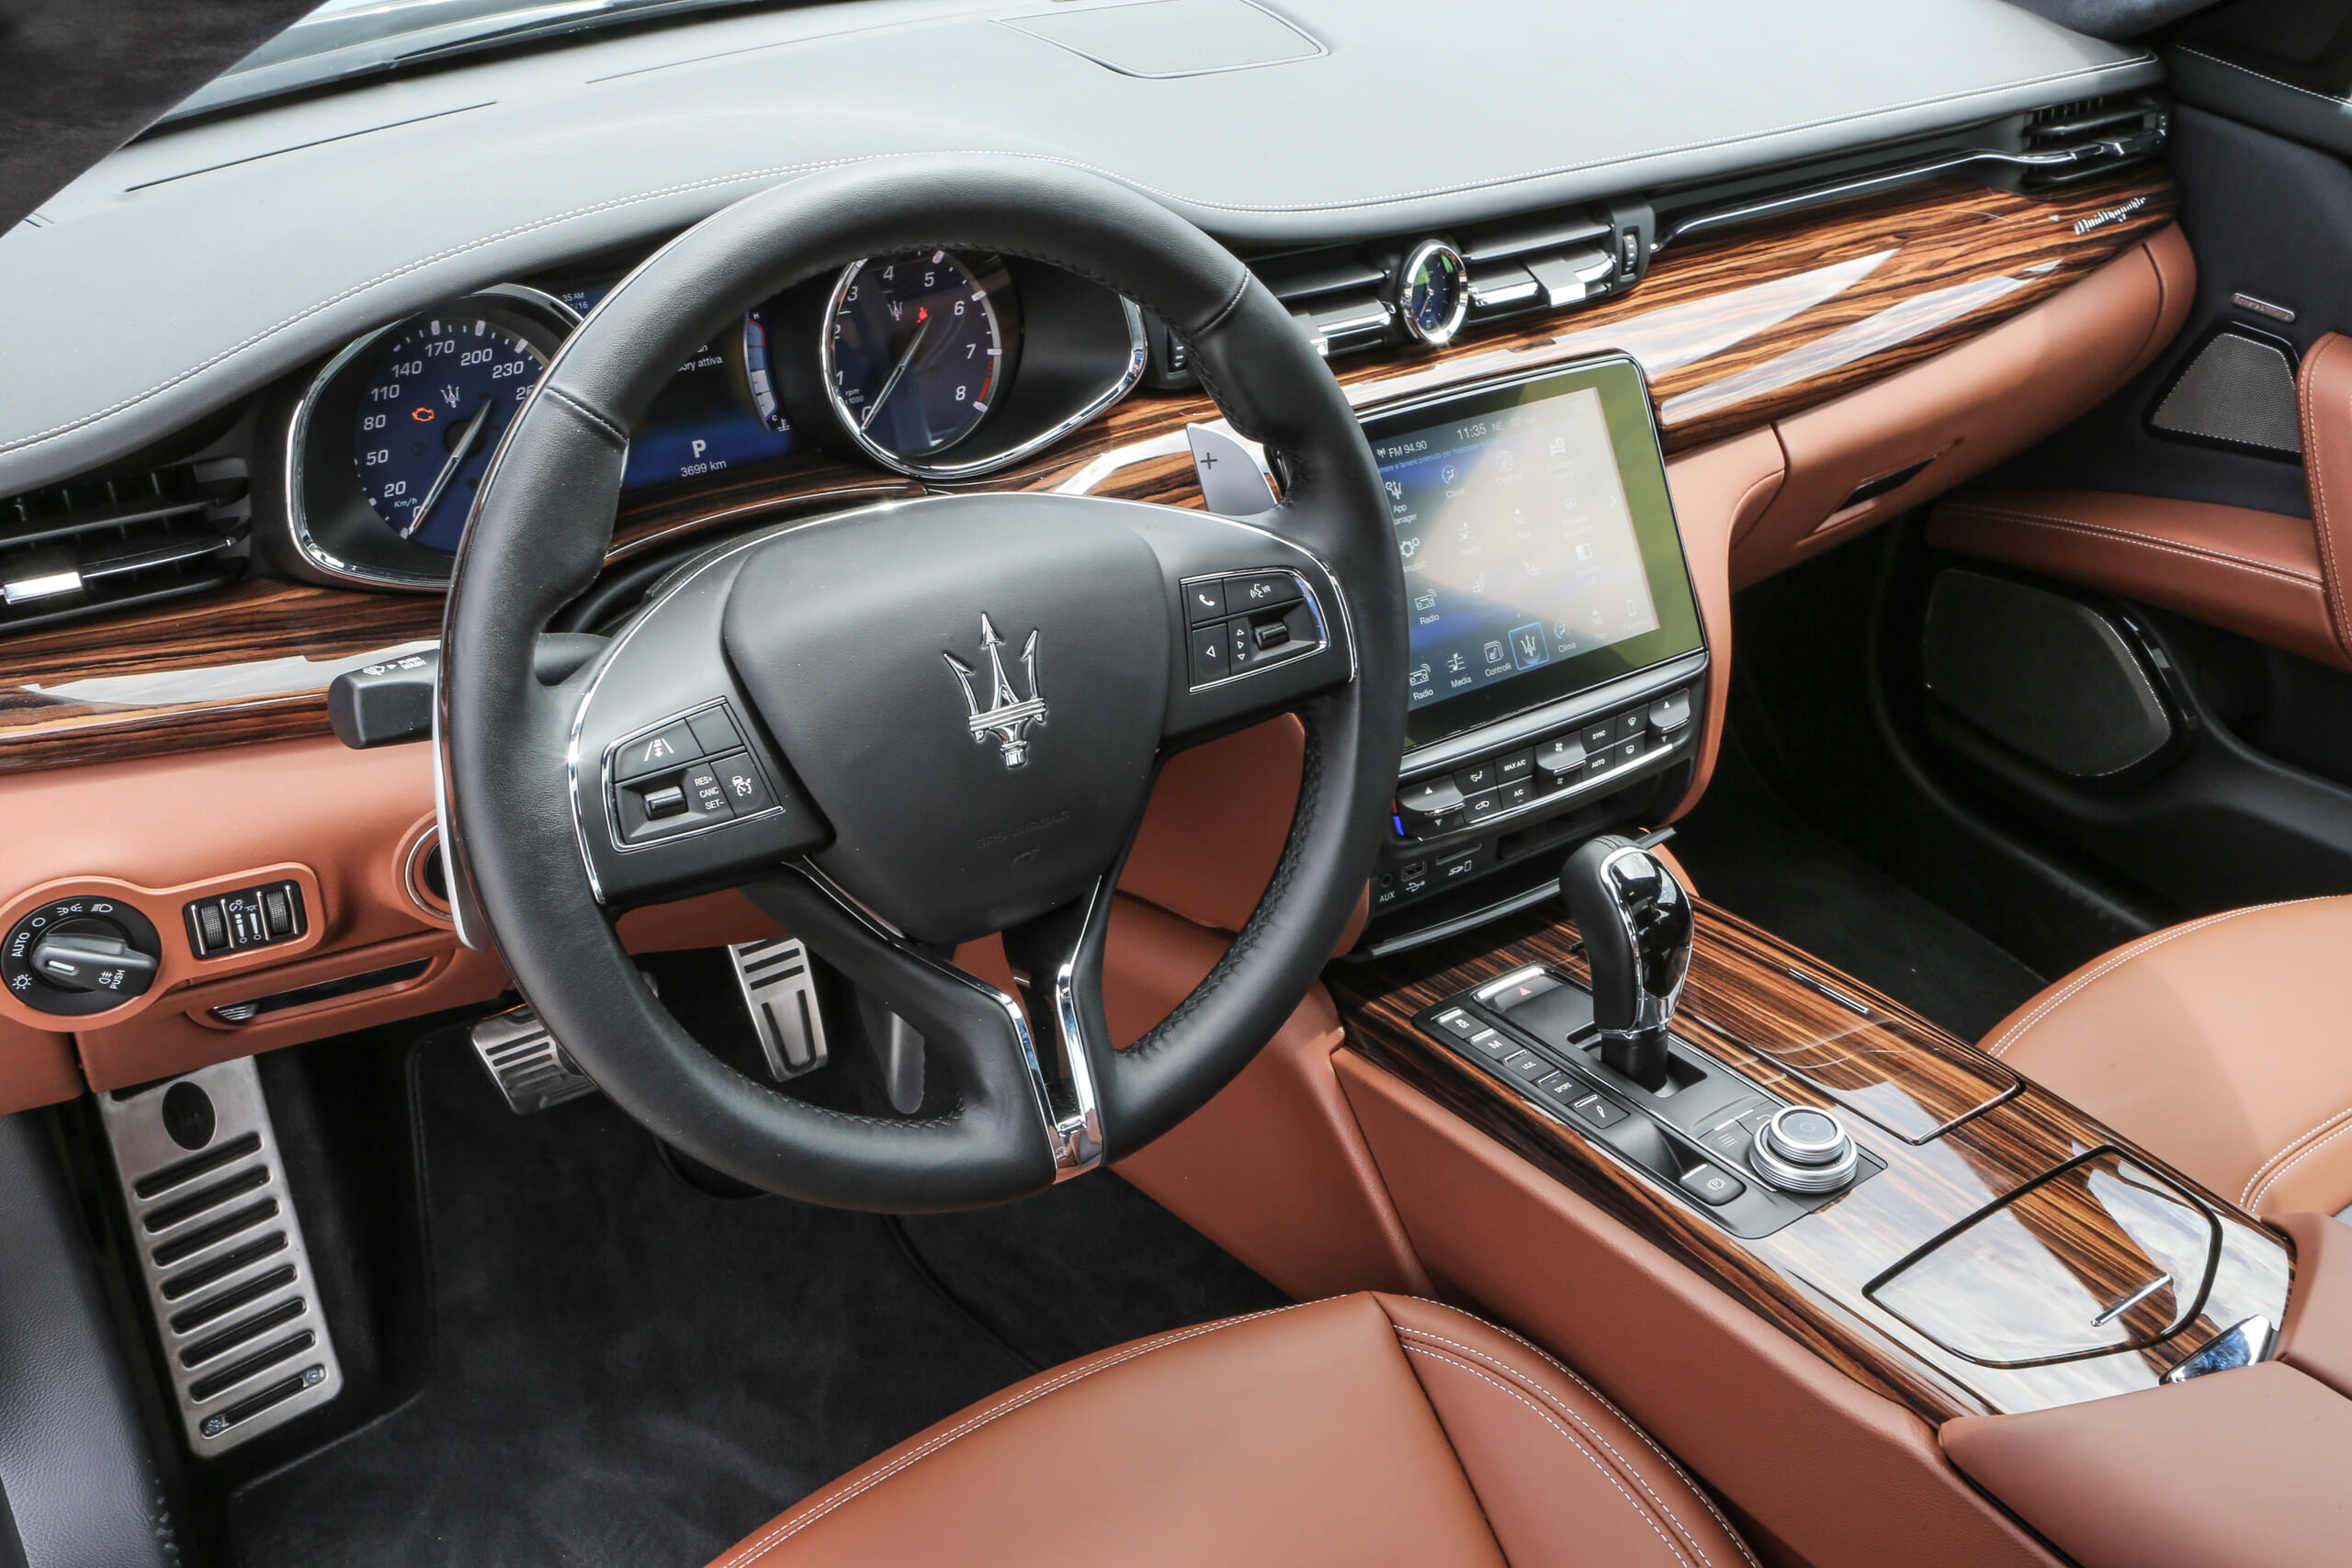 Салон мазерати. Maserati Quattroporte 2020 салон. Мазерати Кватропорте. Мазерати Кватропорте 2016 салон. Maserati Quattroporte 2017 салон.